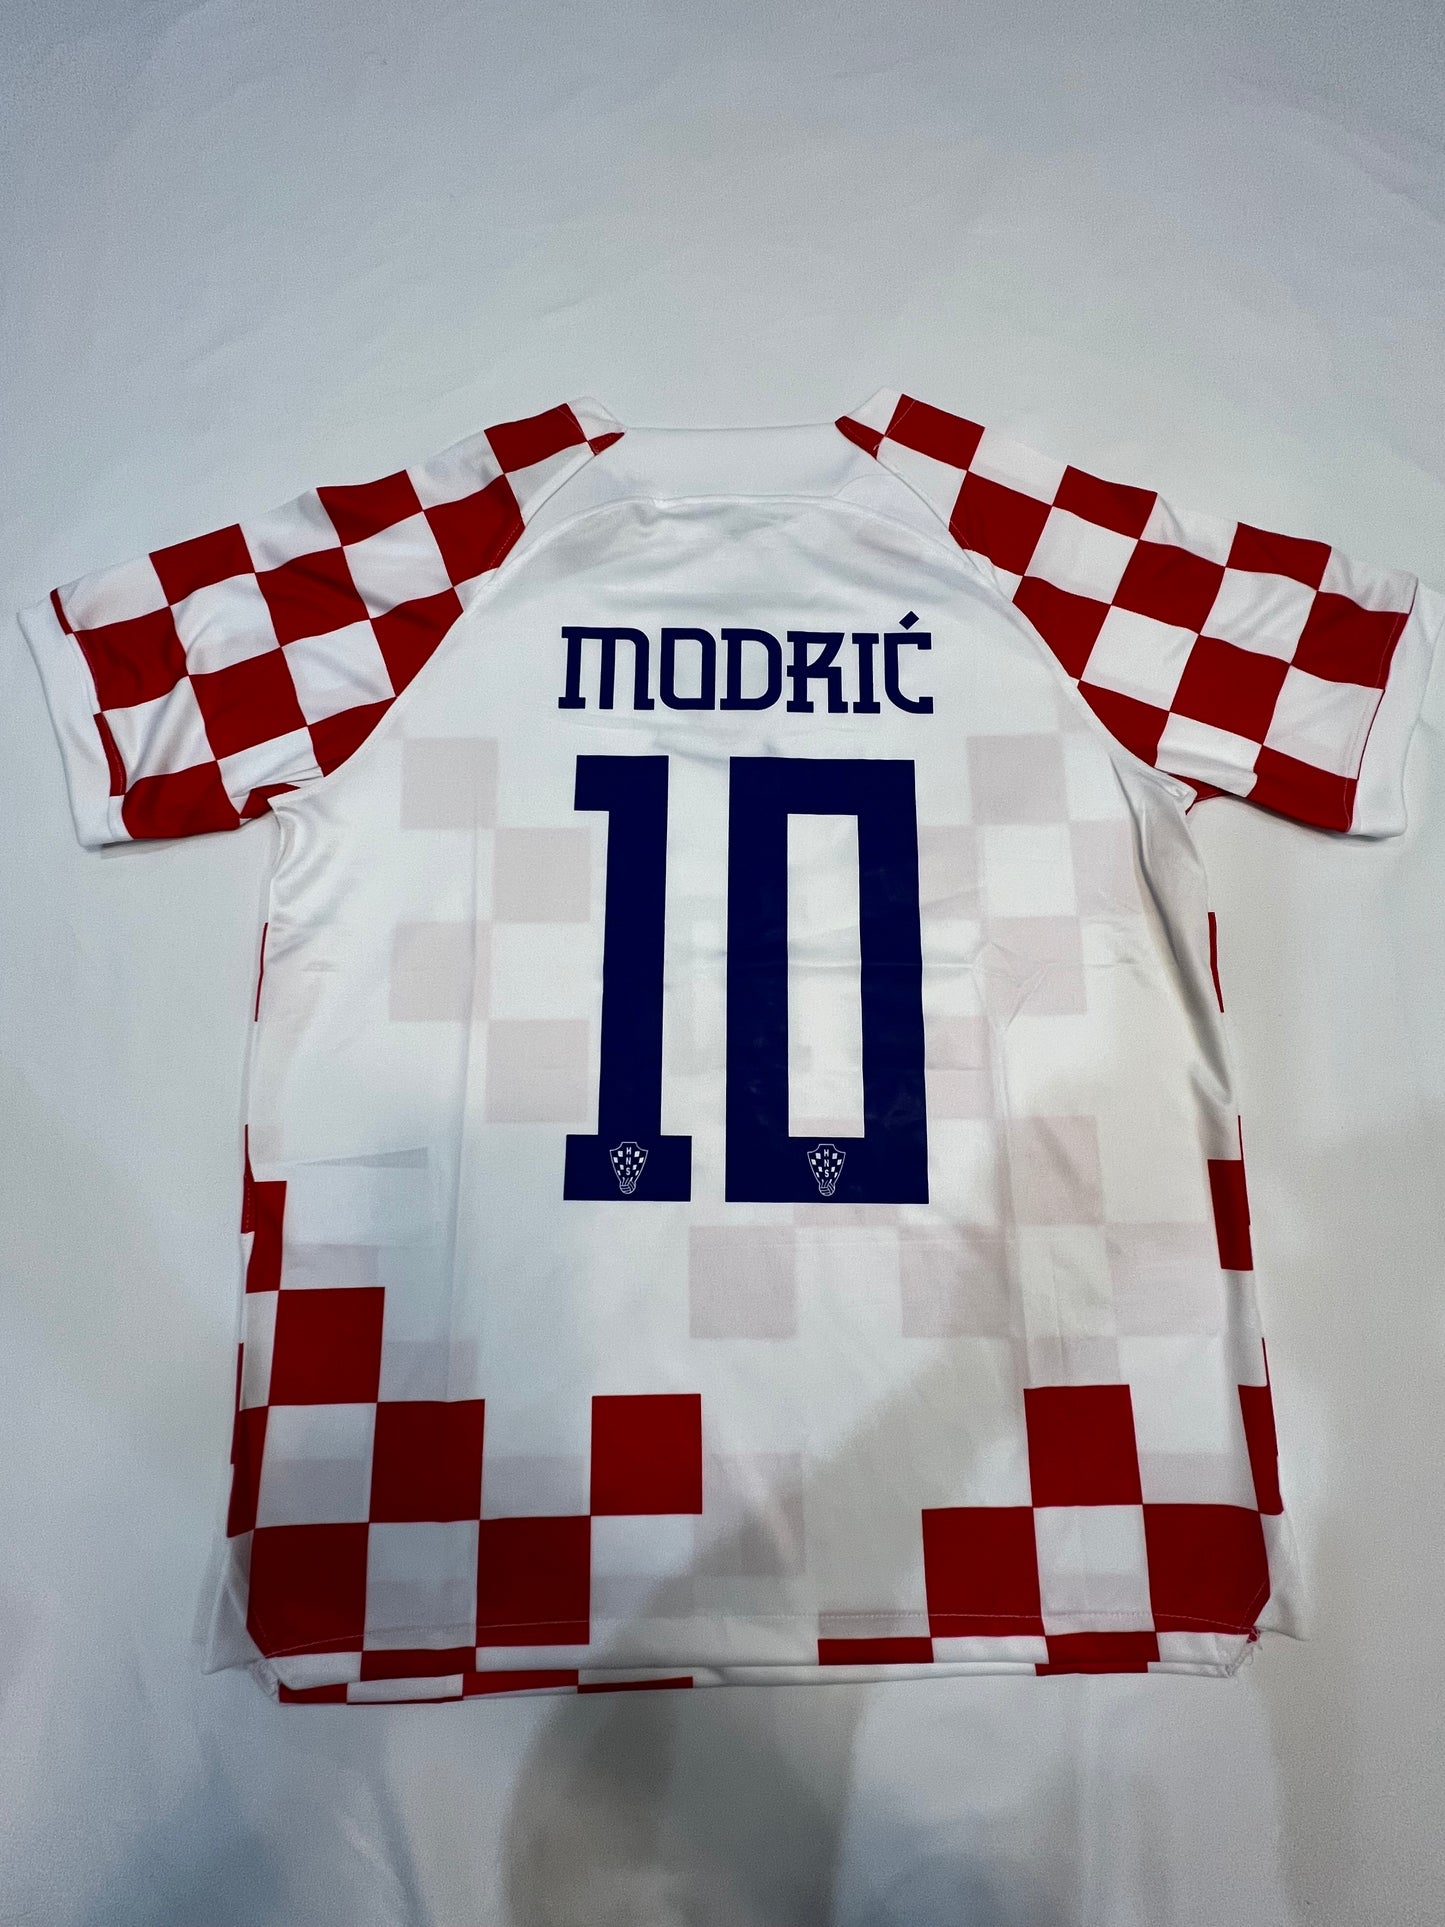 Croatia FIFA Jersey